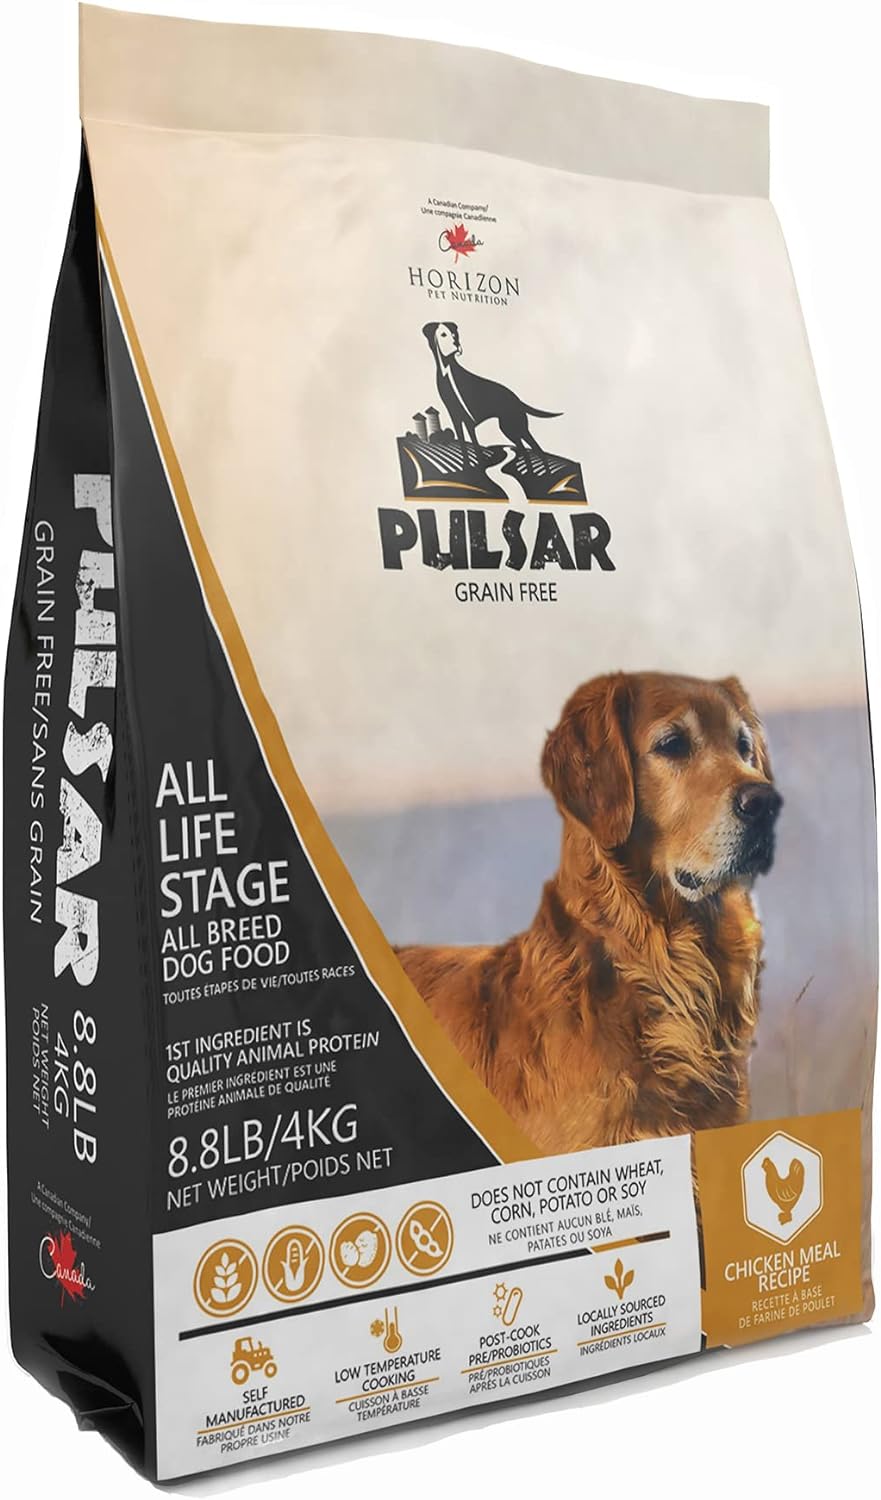 Horizon Pulsar Grain-Free Chicken Formula Dry Dog Food – Gallery Image 1